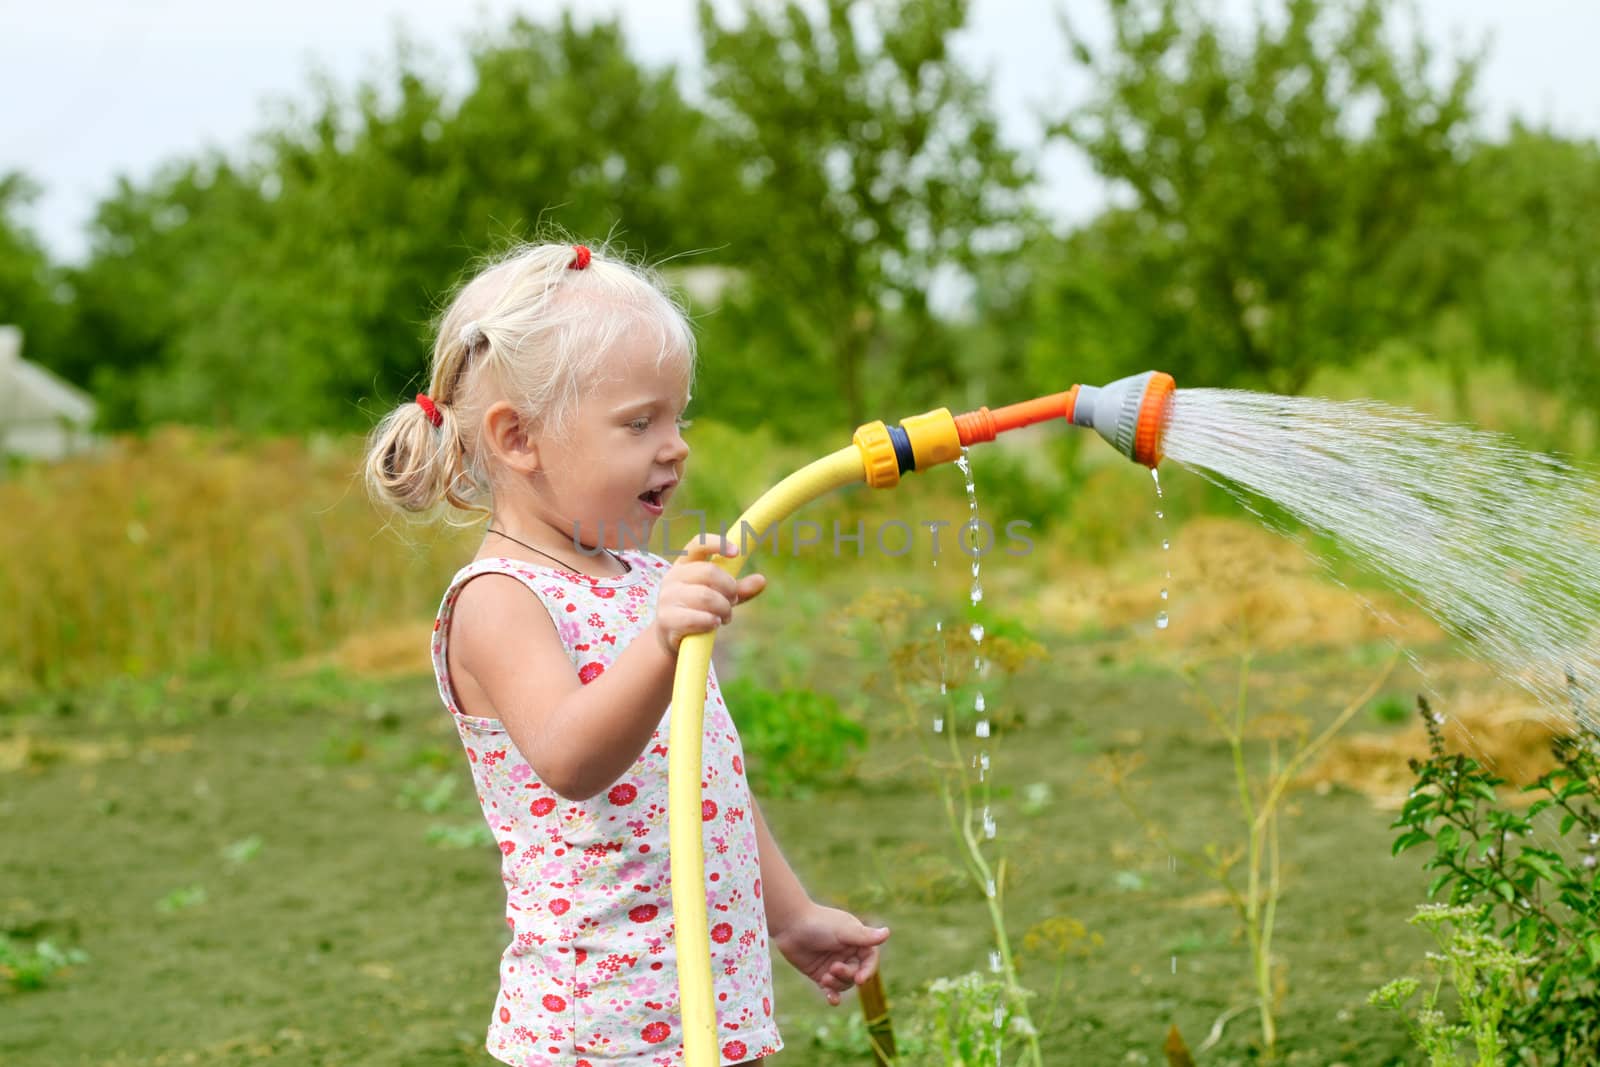 Little girl watering the grass in the garden by rudchenko